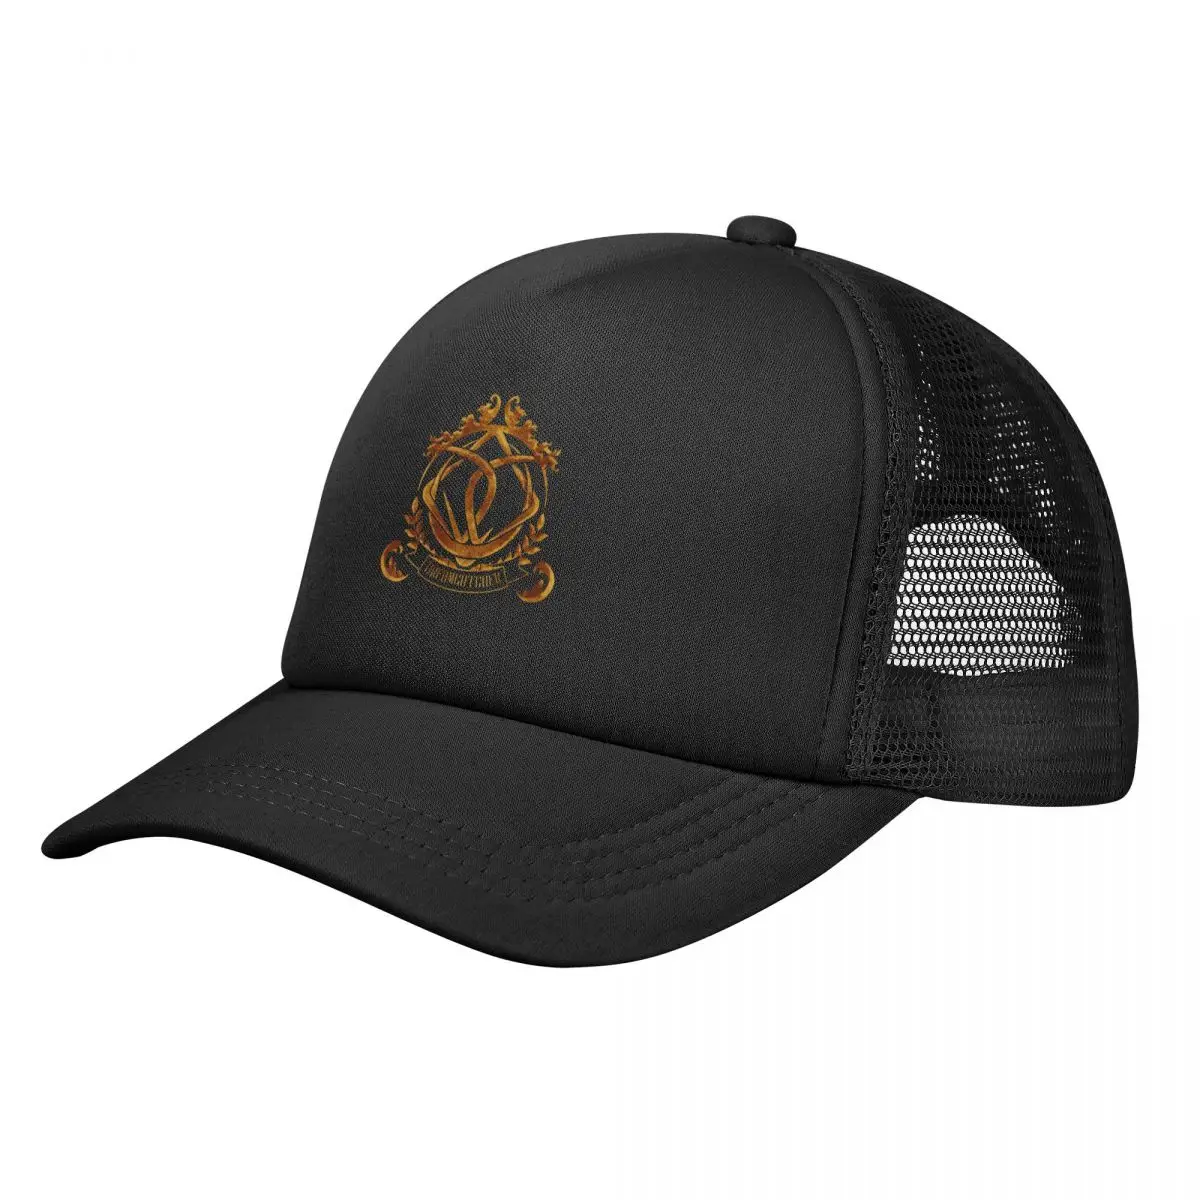 

Copia de Dreamcatcher Follow us VISION logo comeback Paper Baseball Cap Rugby Luxury Man Hat Hats For Women Men's